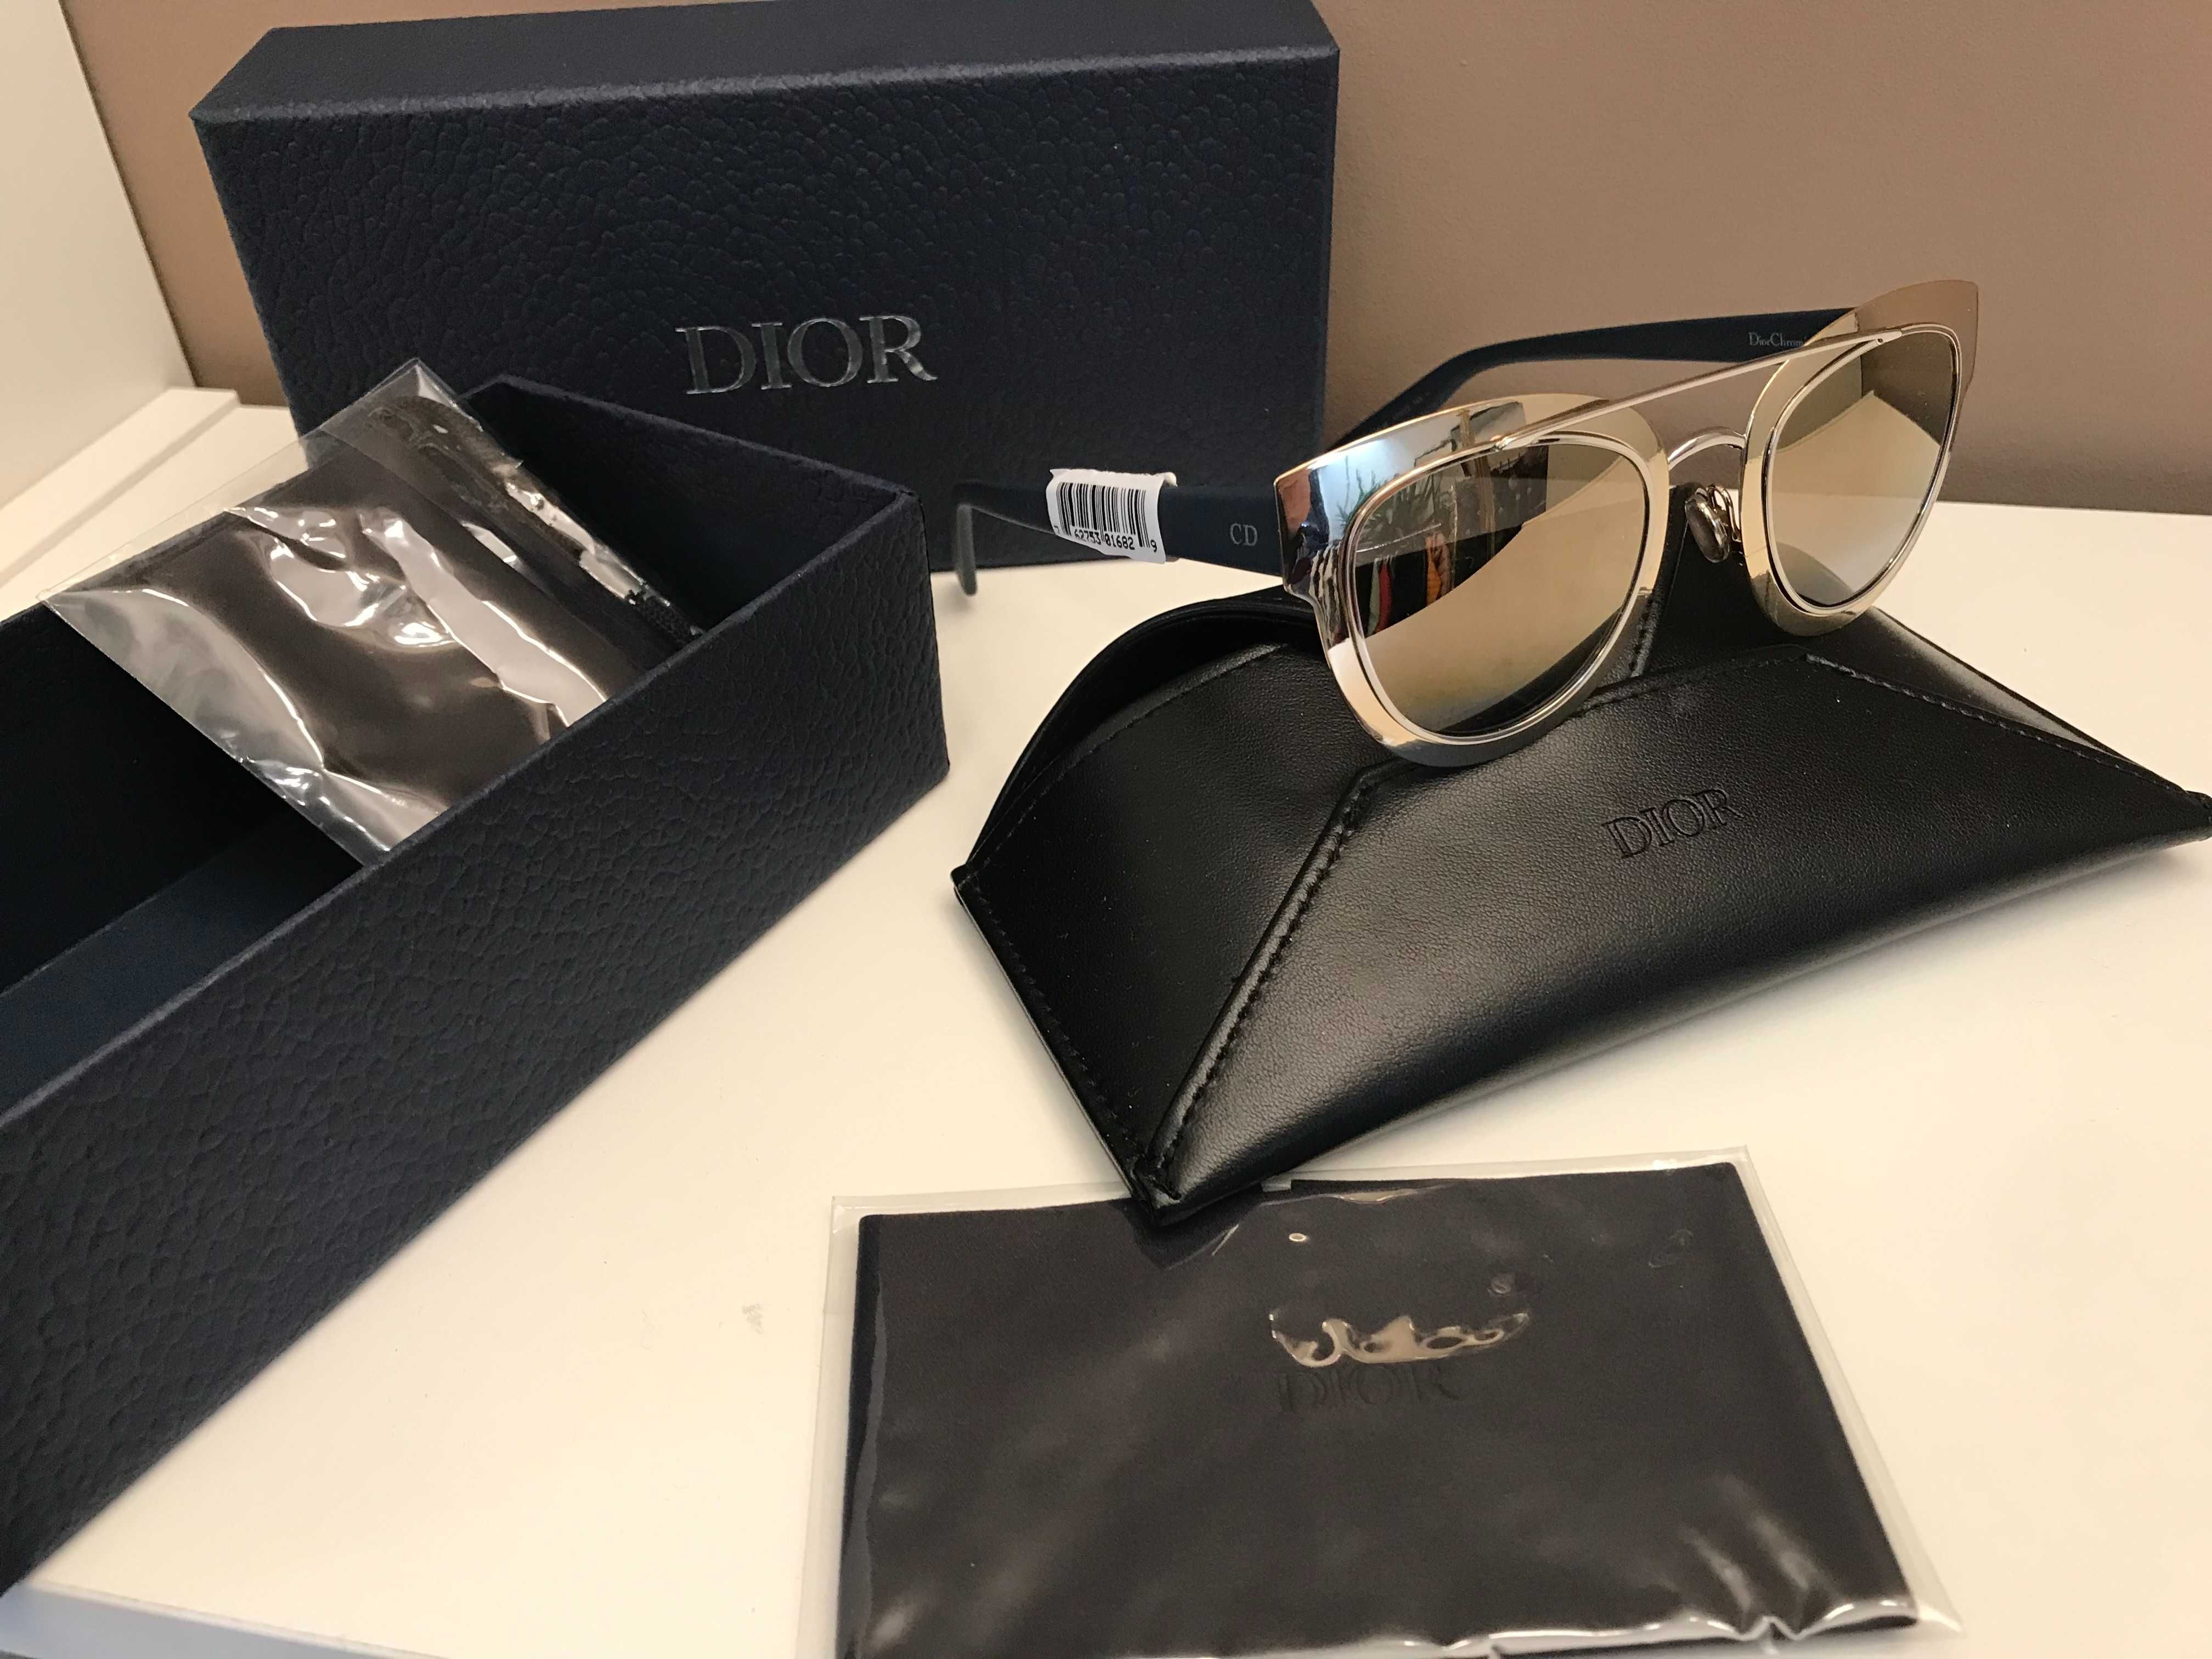 Dior ochelari soare, originali, full box, retail 400 euro